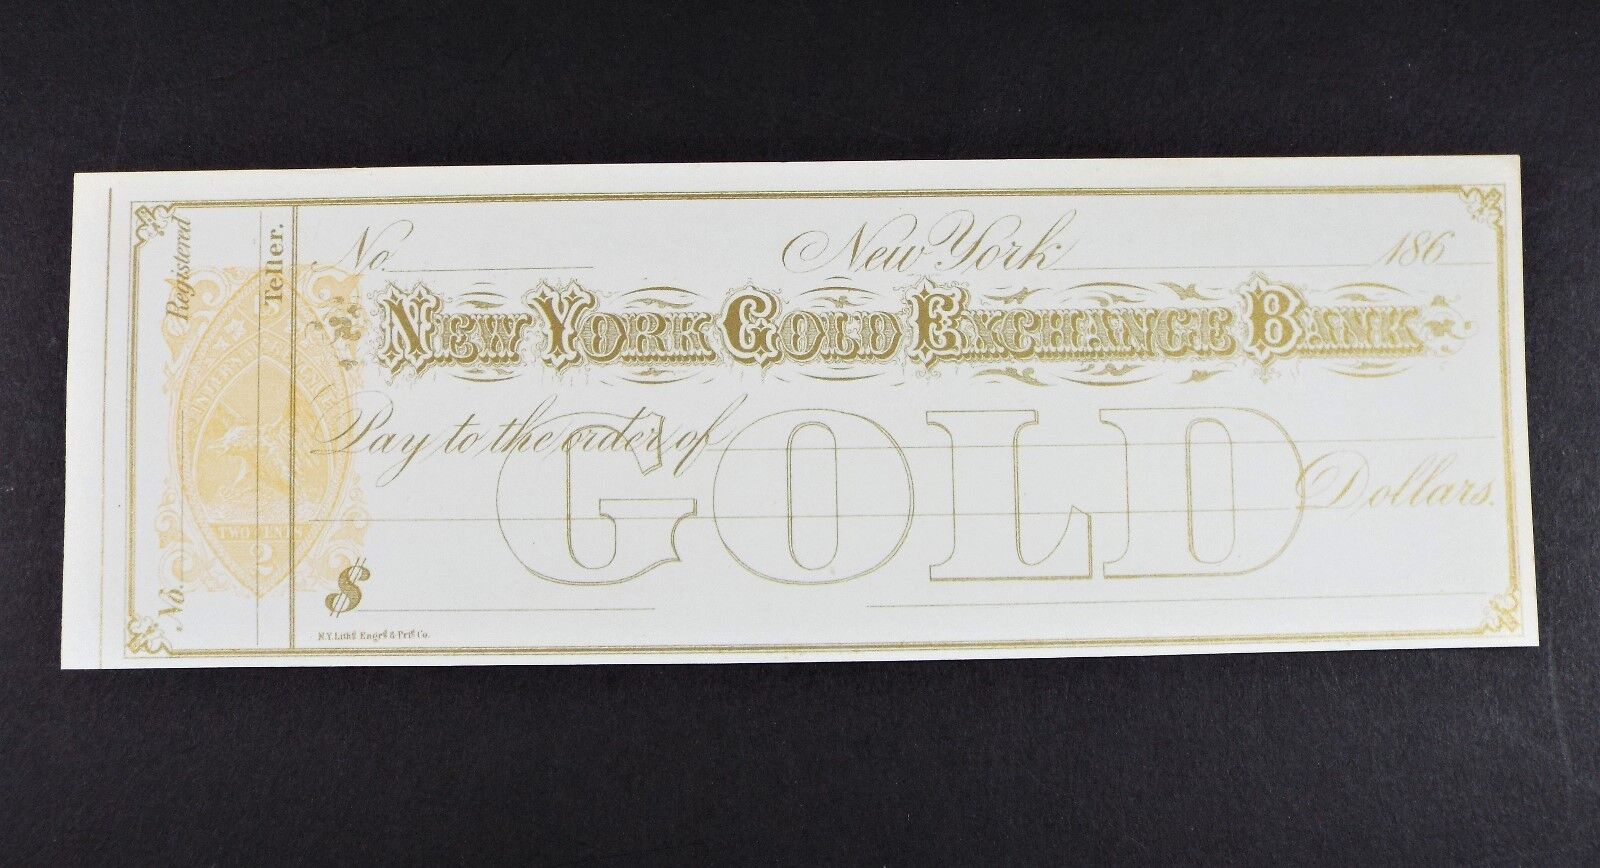 1860s New York Gold Exchange Bank Unused Check - 2 Cent Internal Revenue Stamp